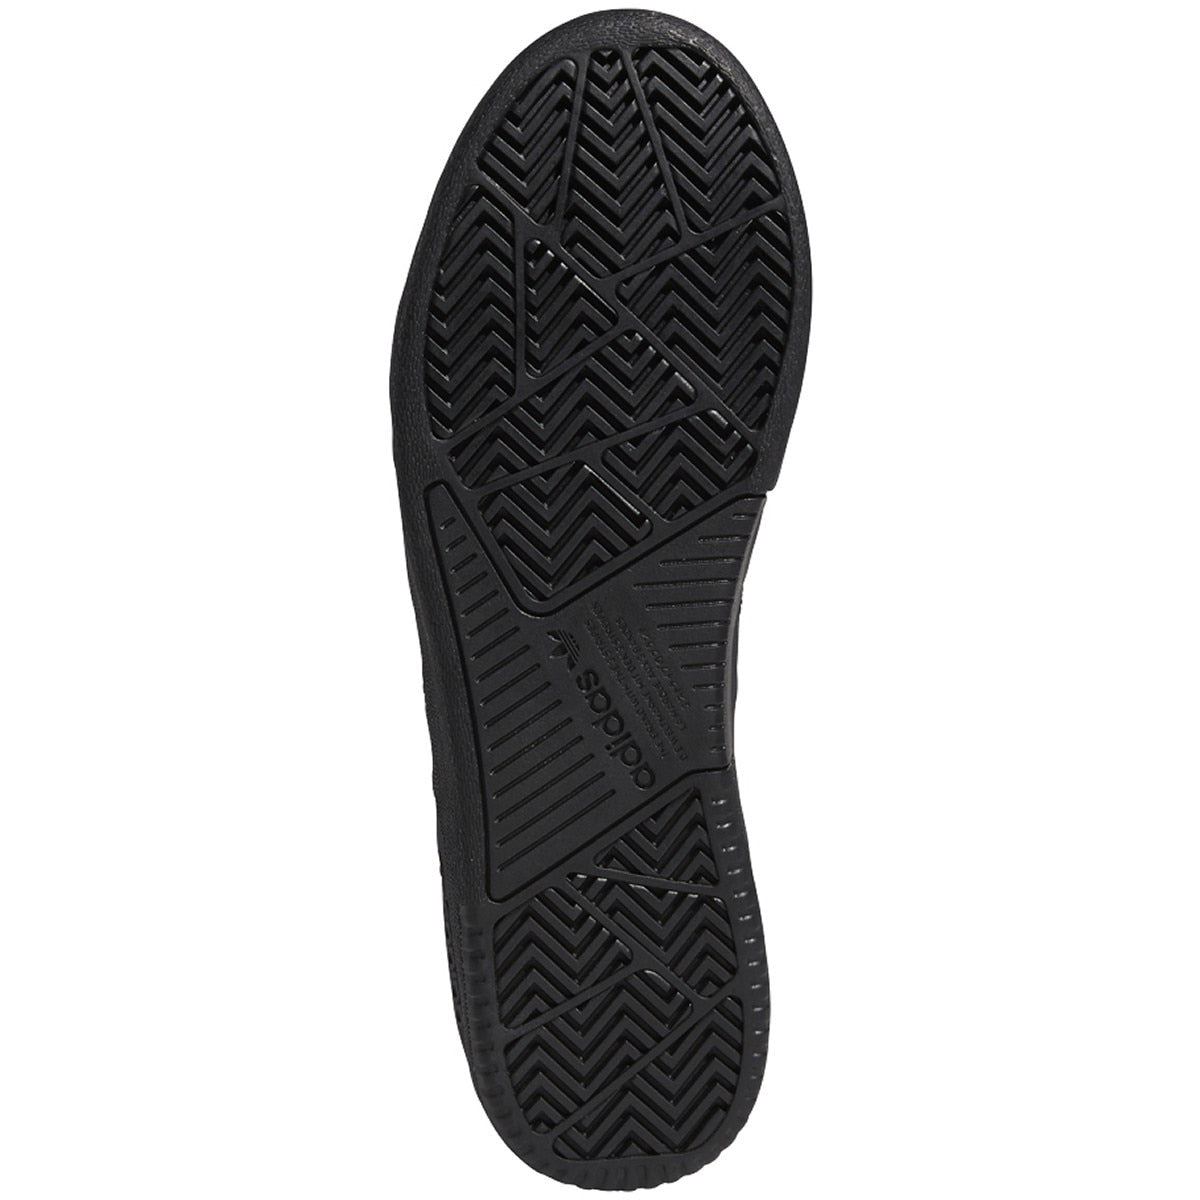 Adidas Tyshawn Skate Shoe - Black/Black/Gold